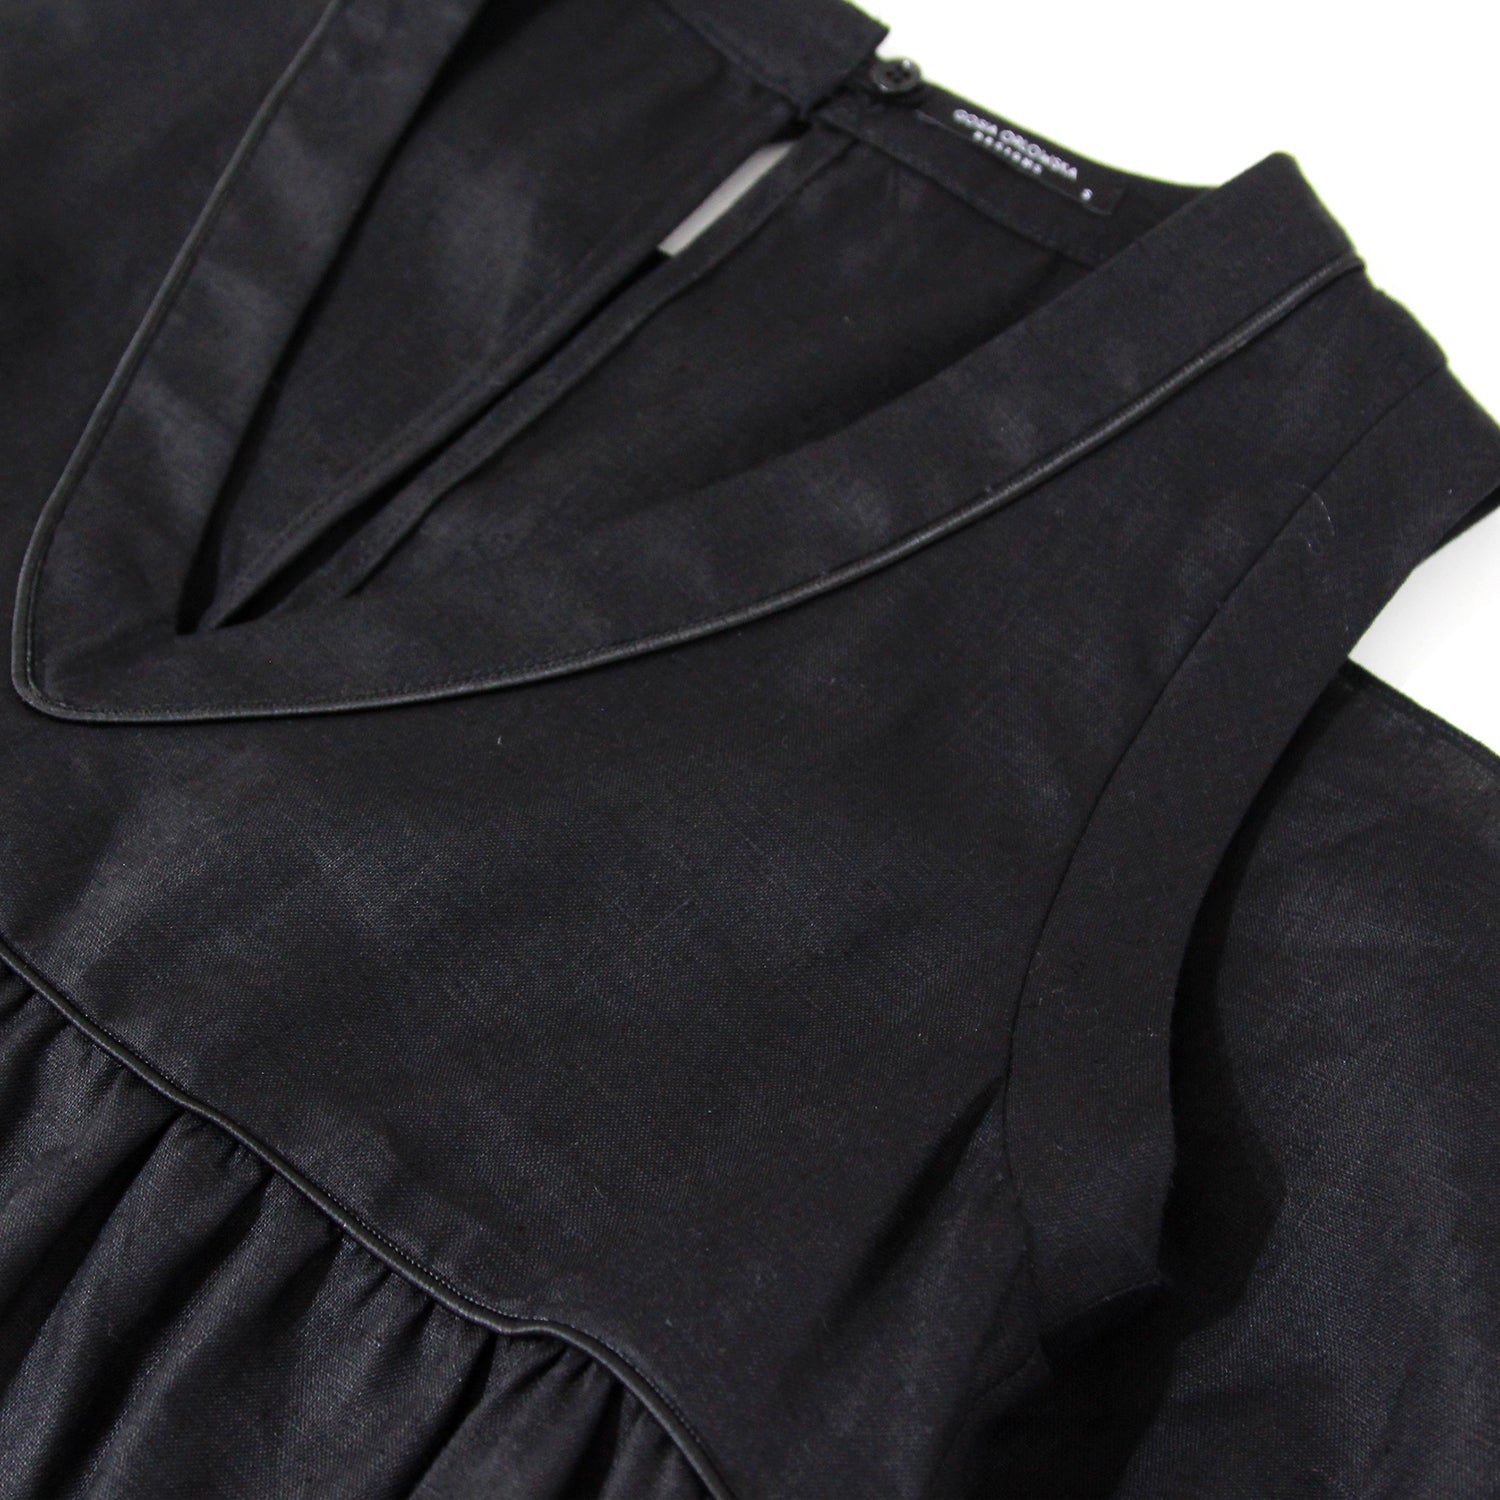 Get Valencia Black Linen Dress by Gosia Orlowska